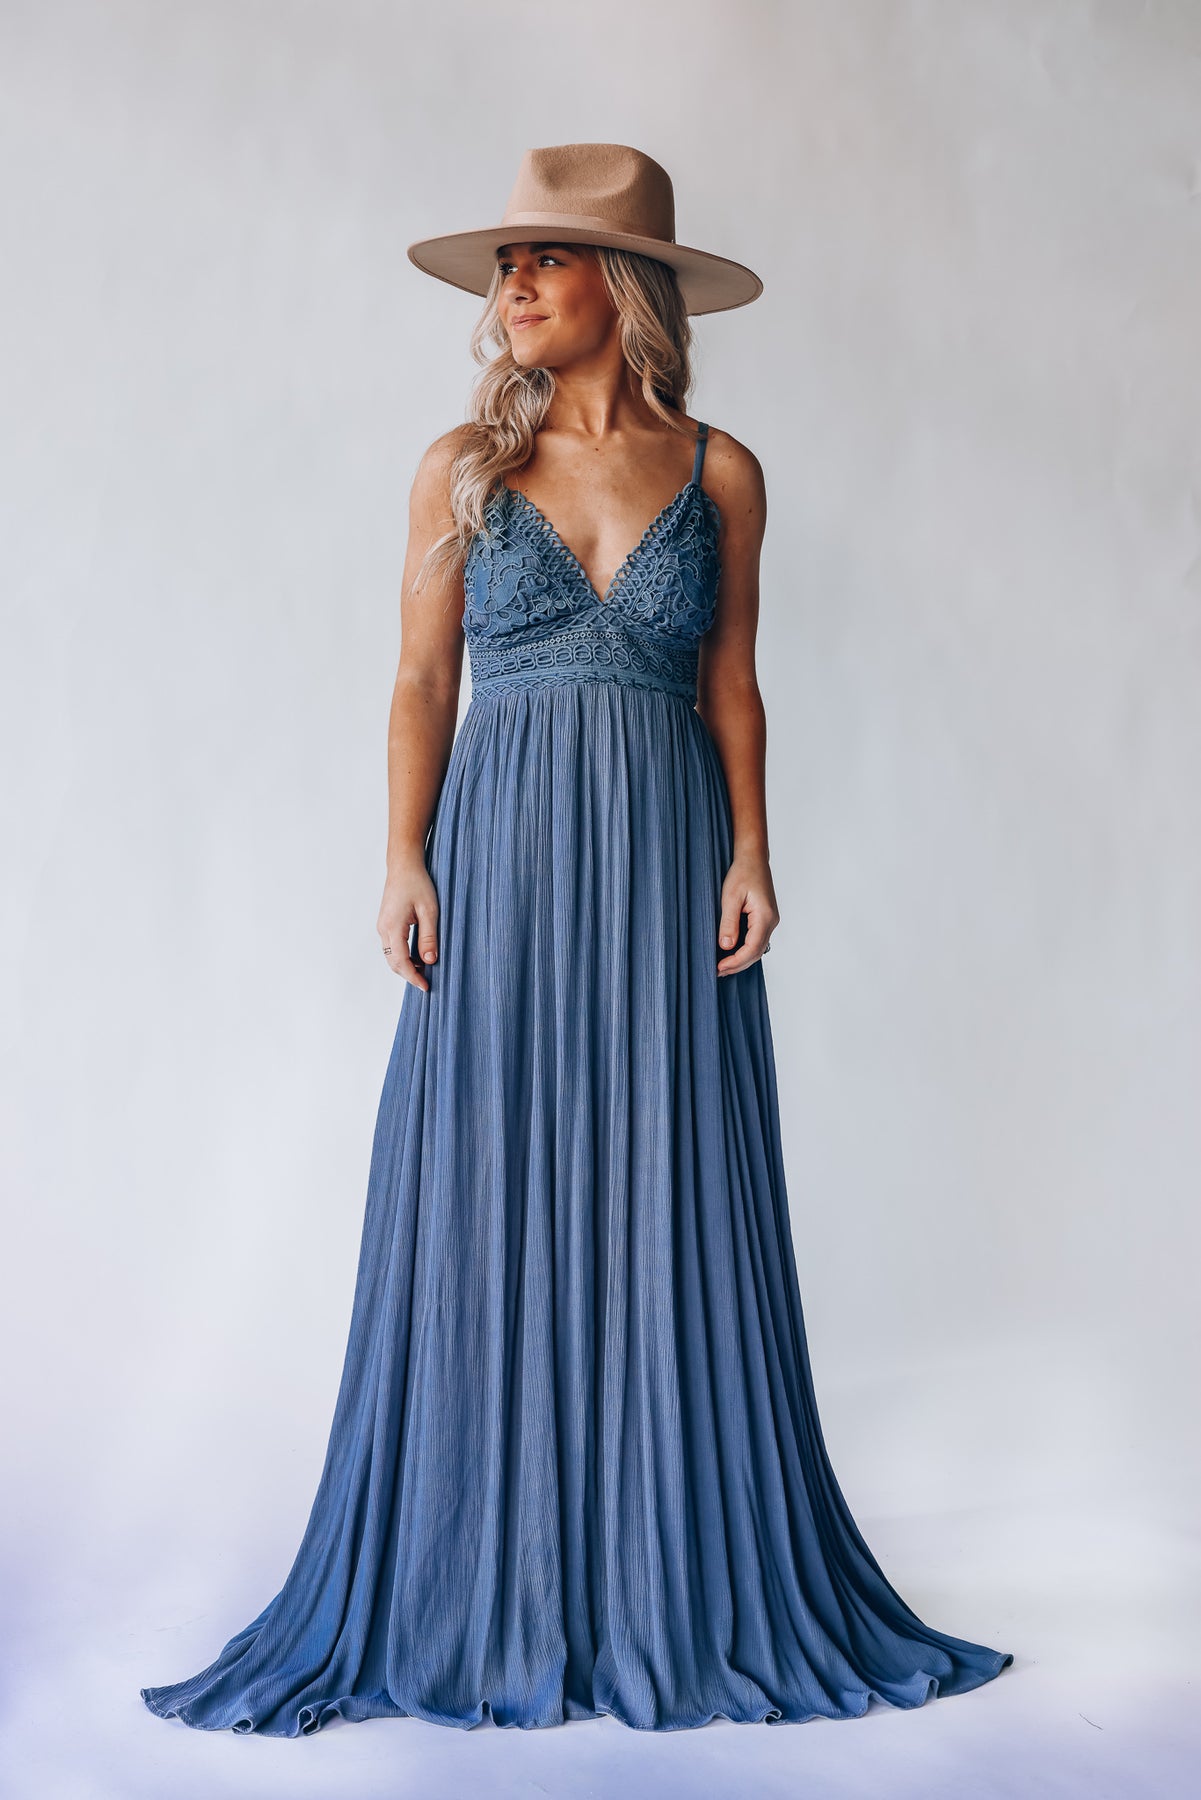 Wanderlust Maxi Dress (Denim Blue) Alternative Southern –